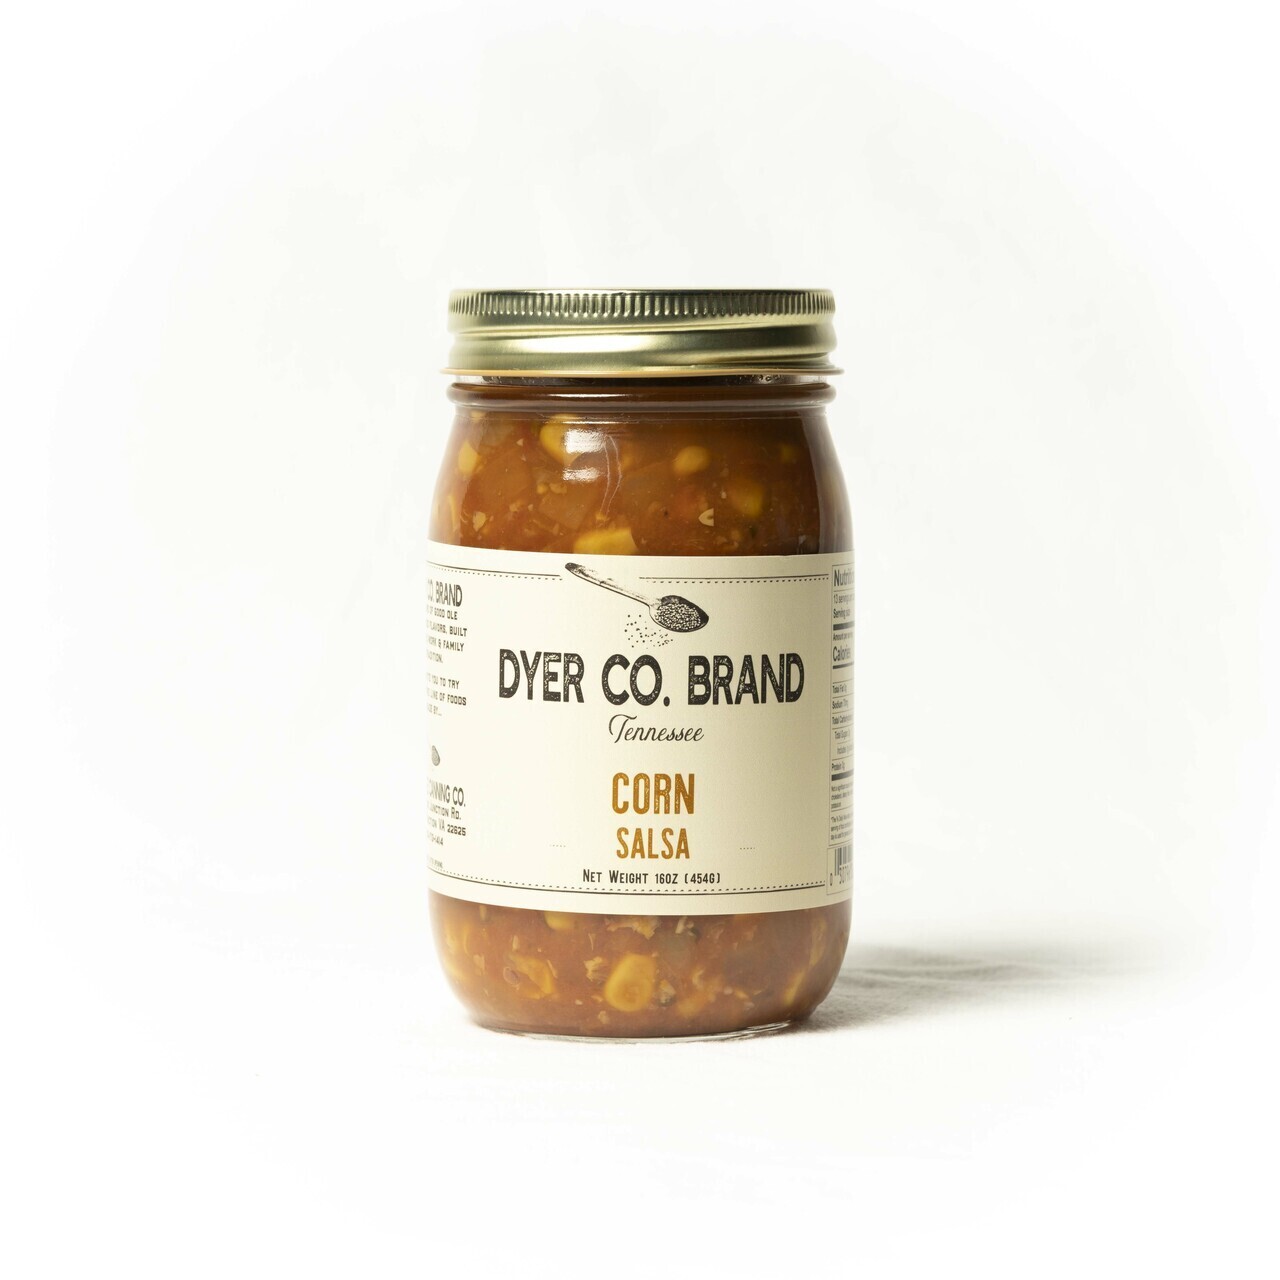 Dyer Co Brand Corn Salsa